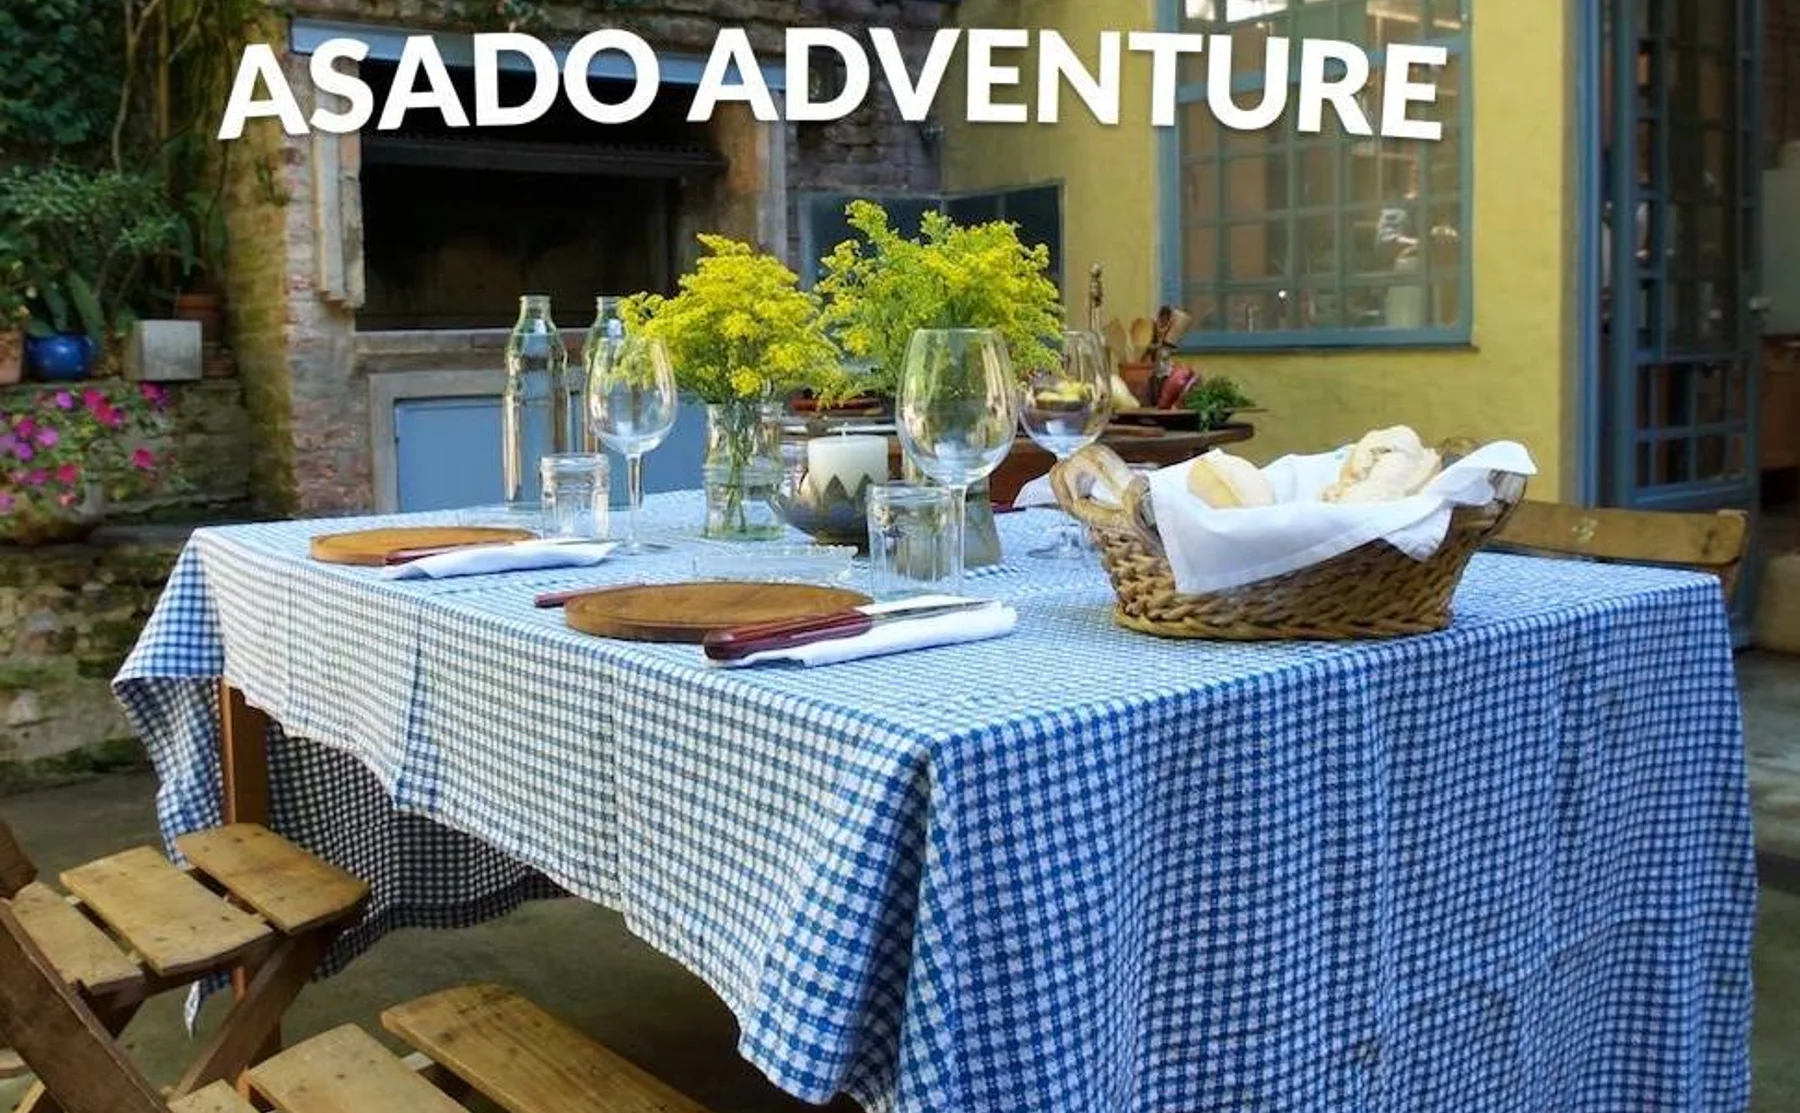 The Buenos Aires Asado adventure - 627237